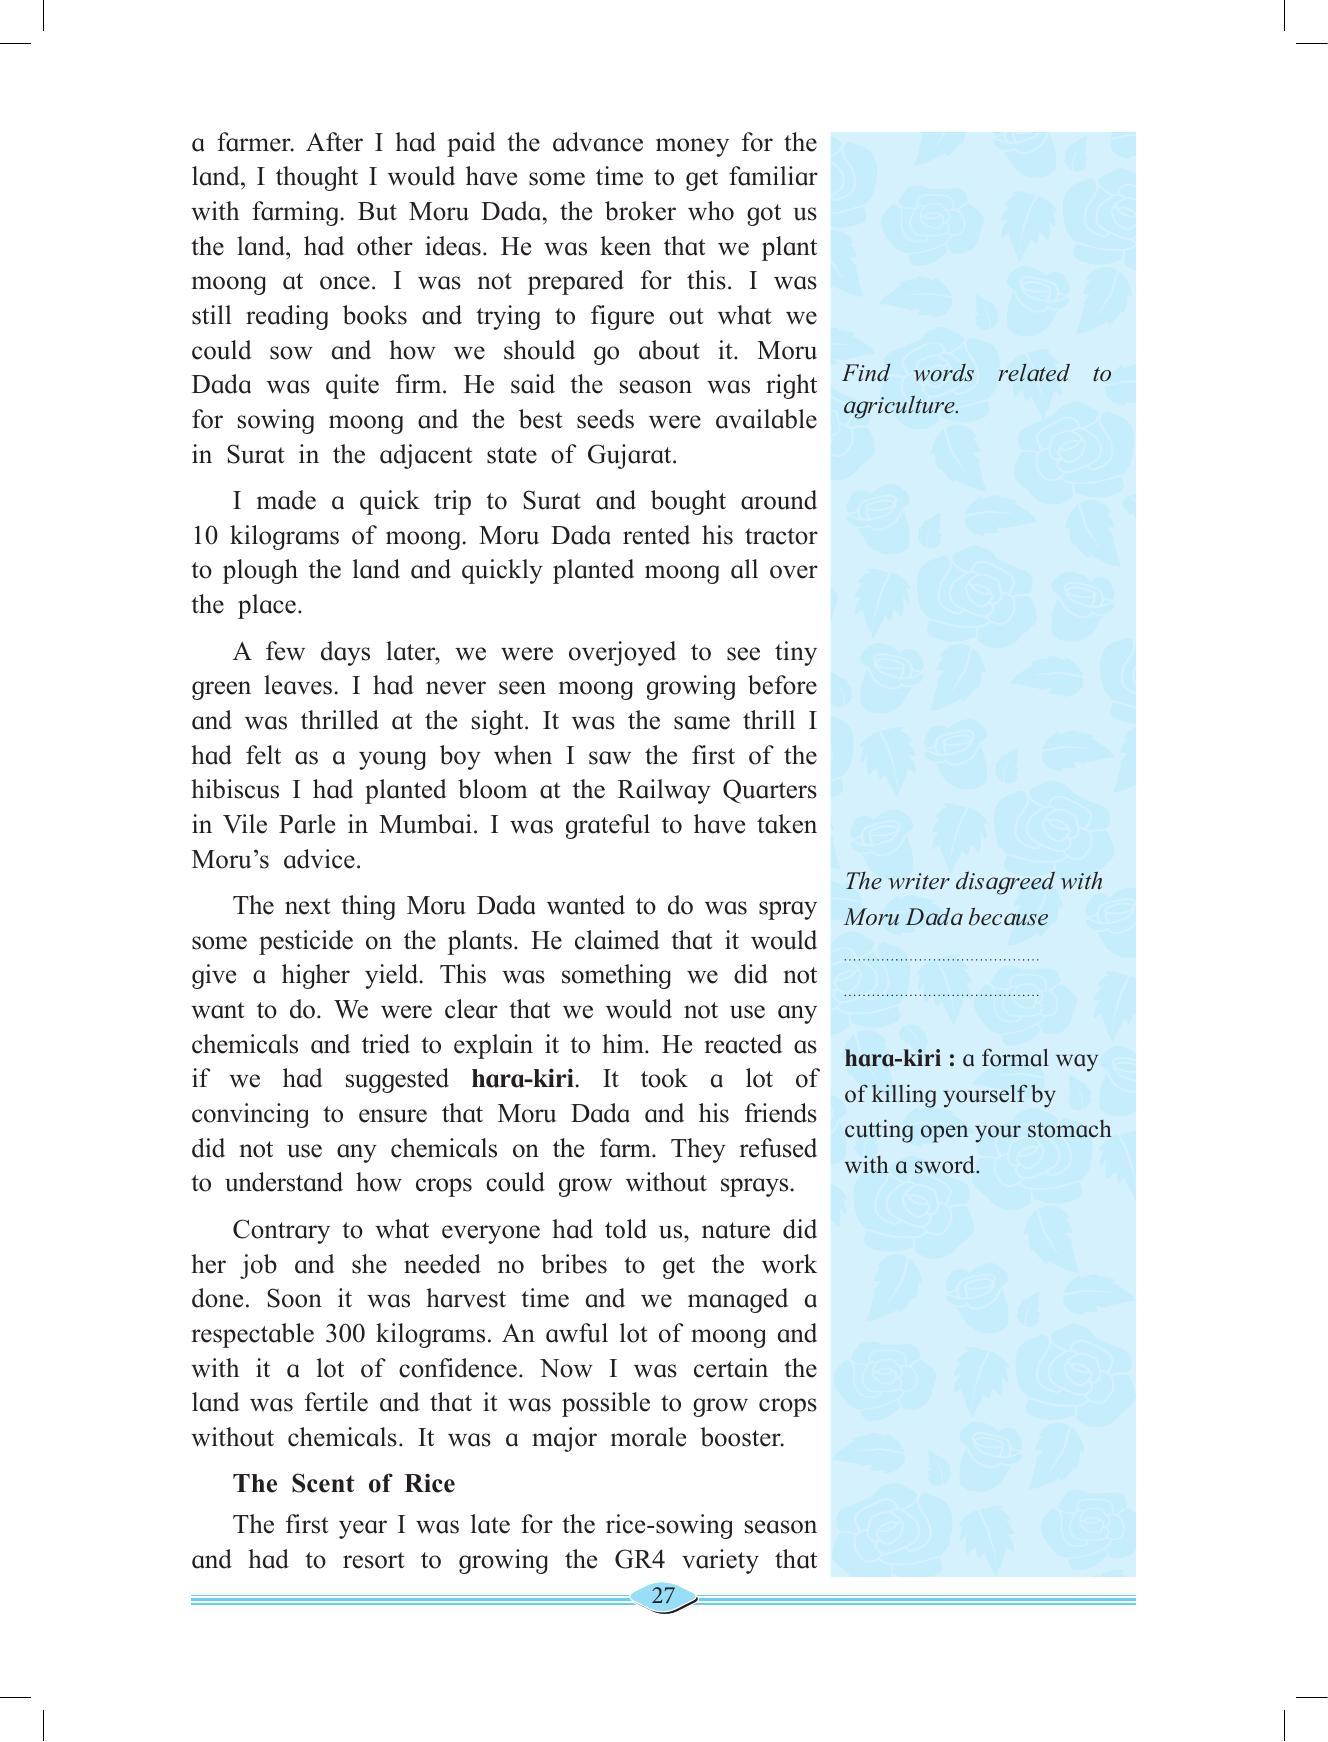 Maharashtra Board Class 11 English Textbook - Page 41